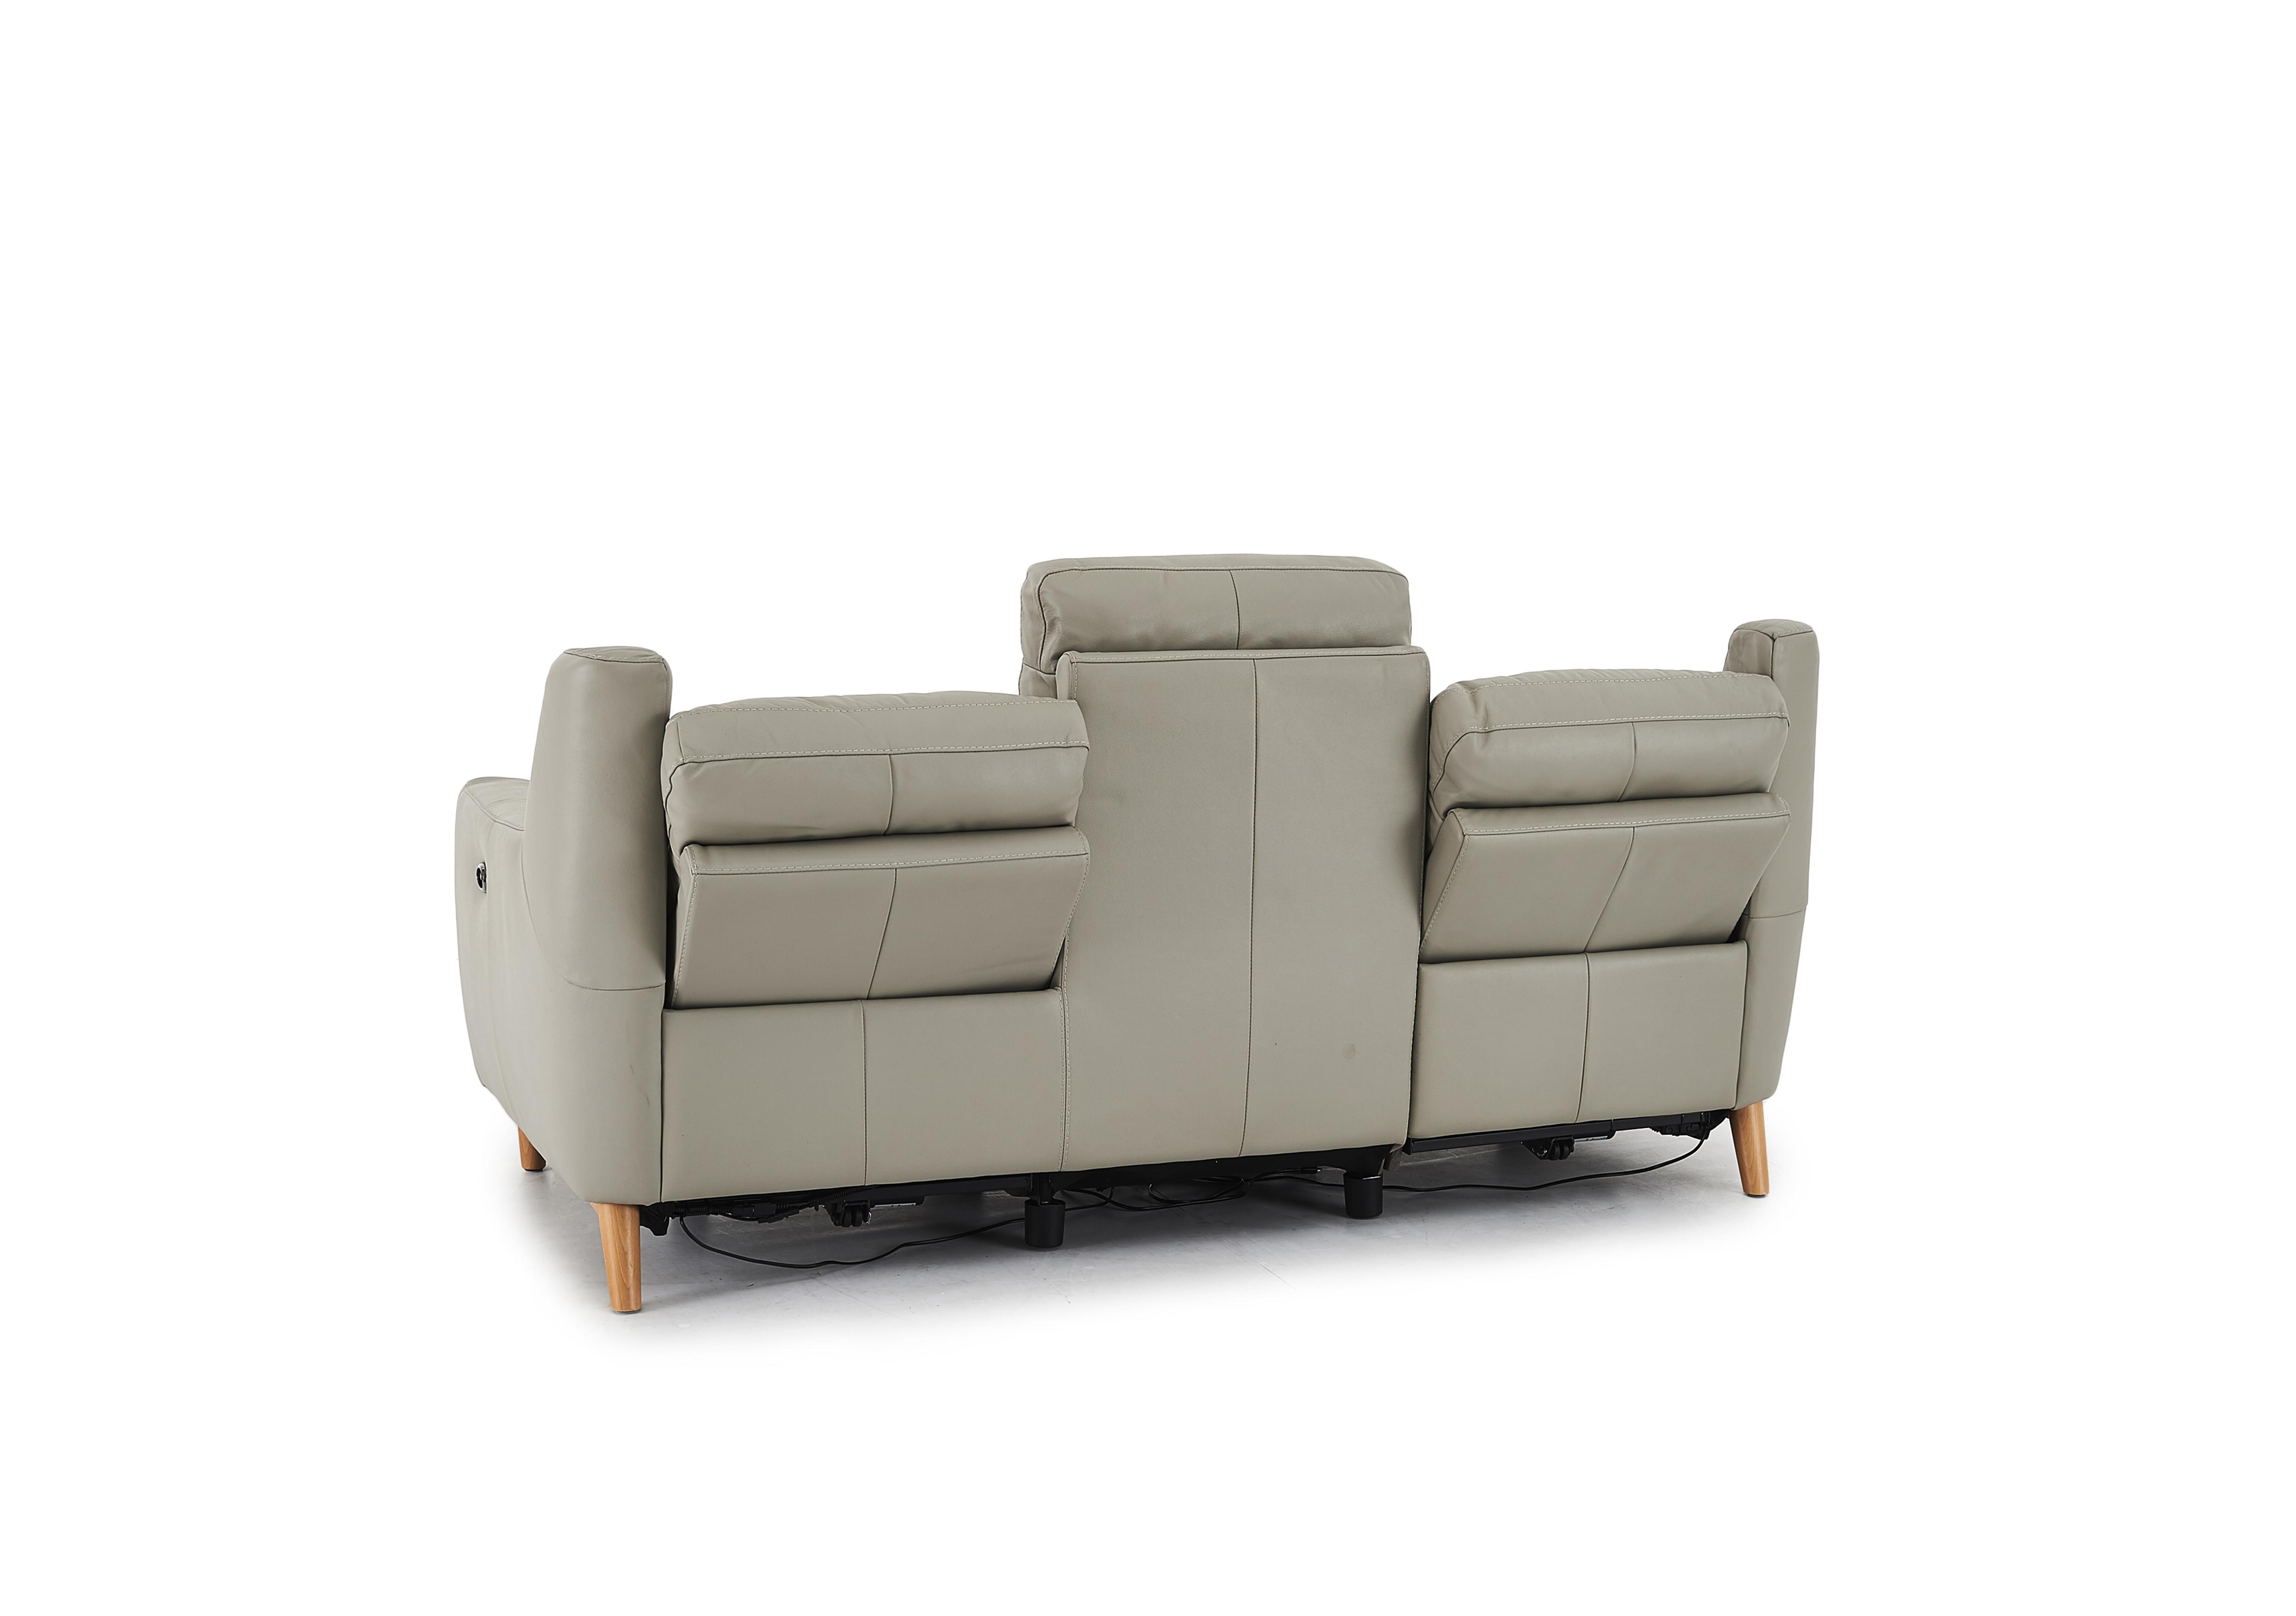 3 seat recliner sofa